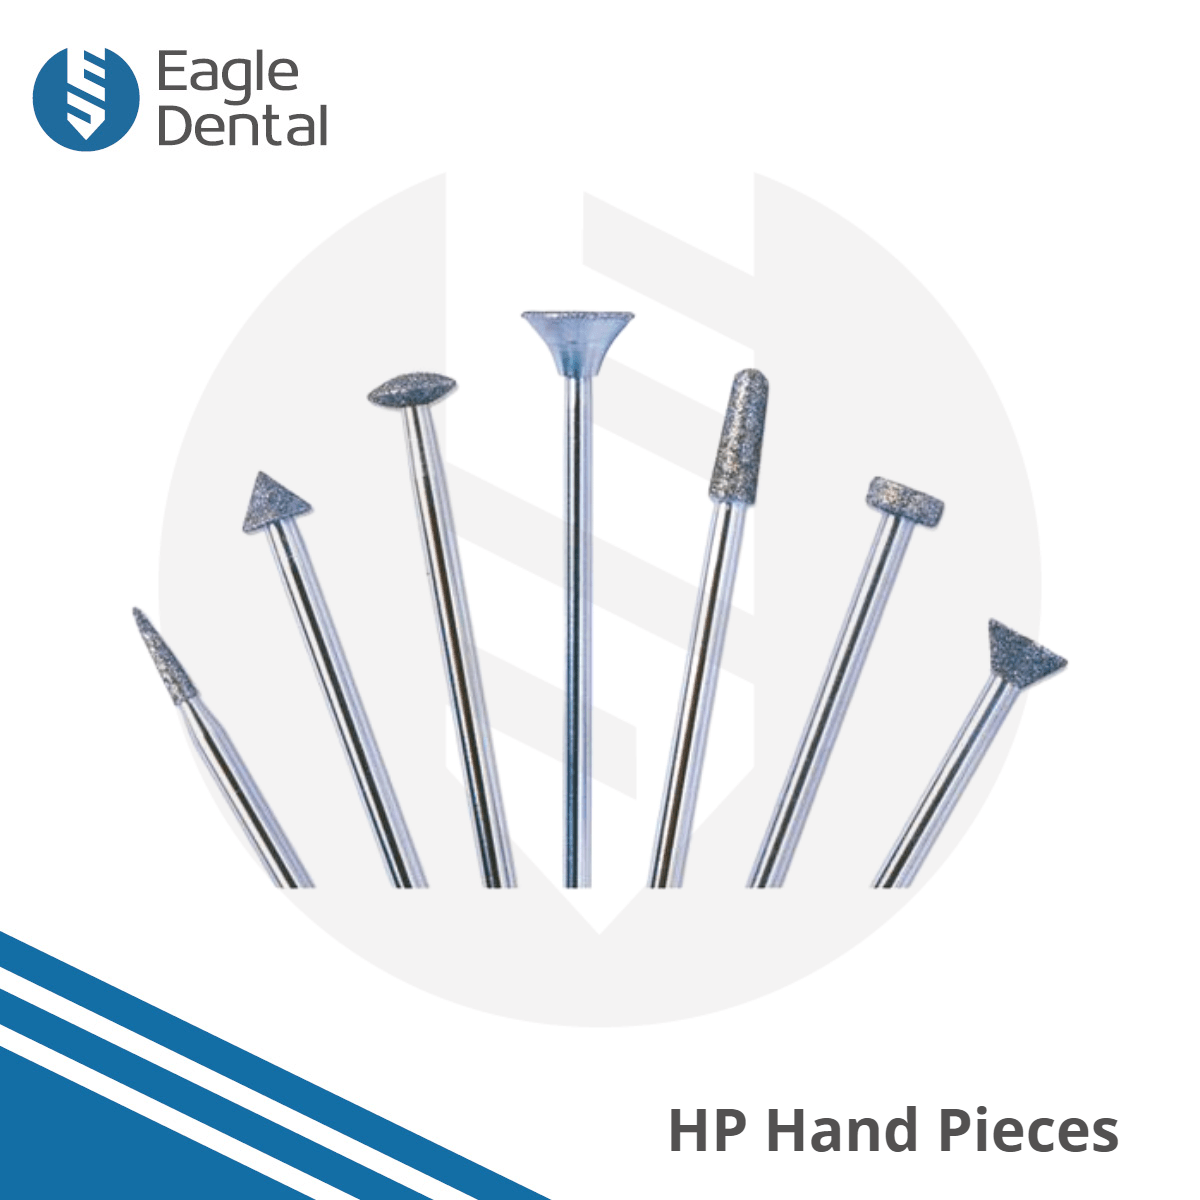 5 x Handpiece HP burs for dental lab